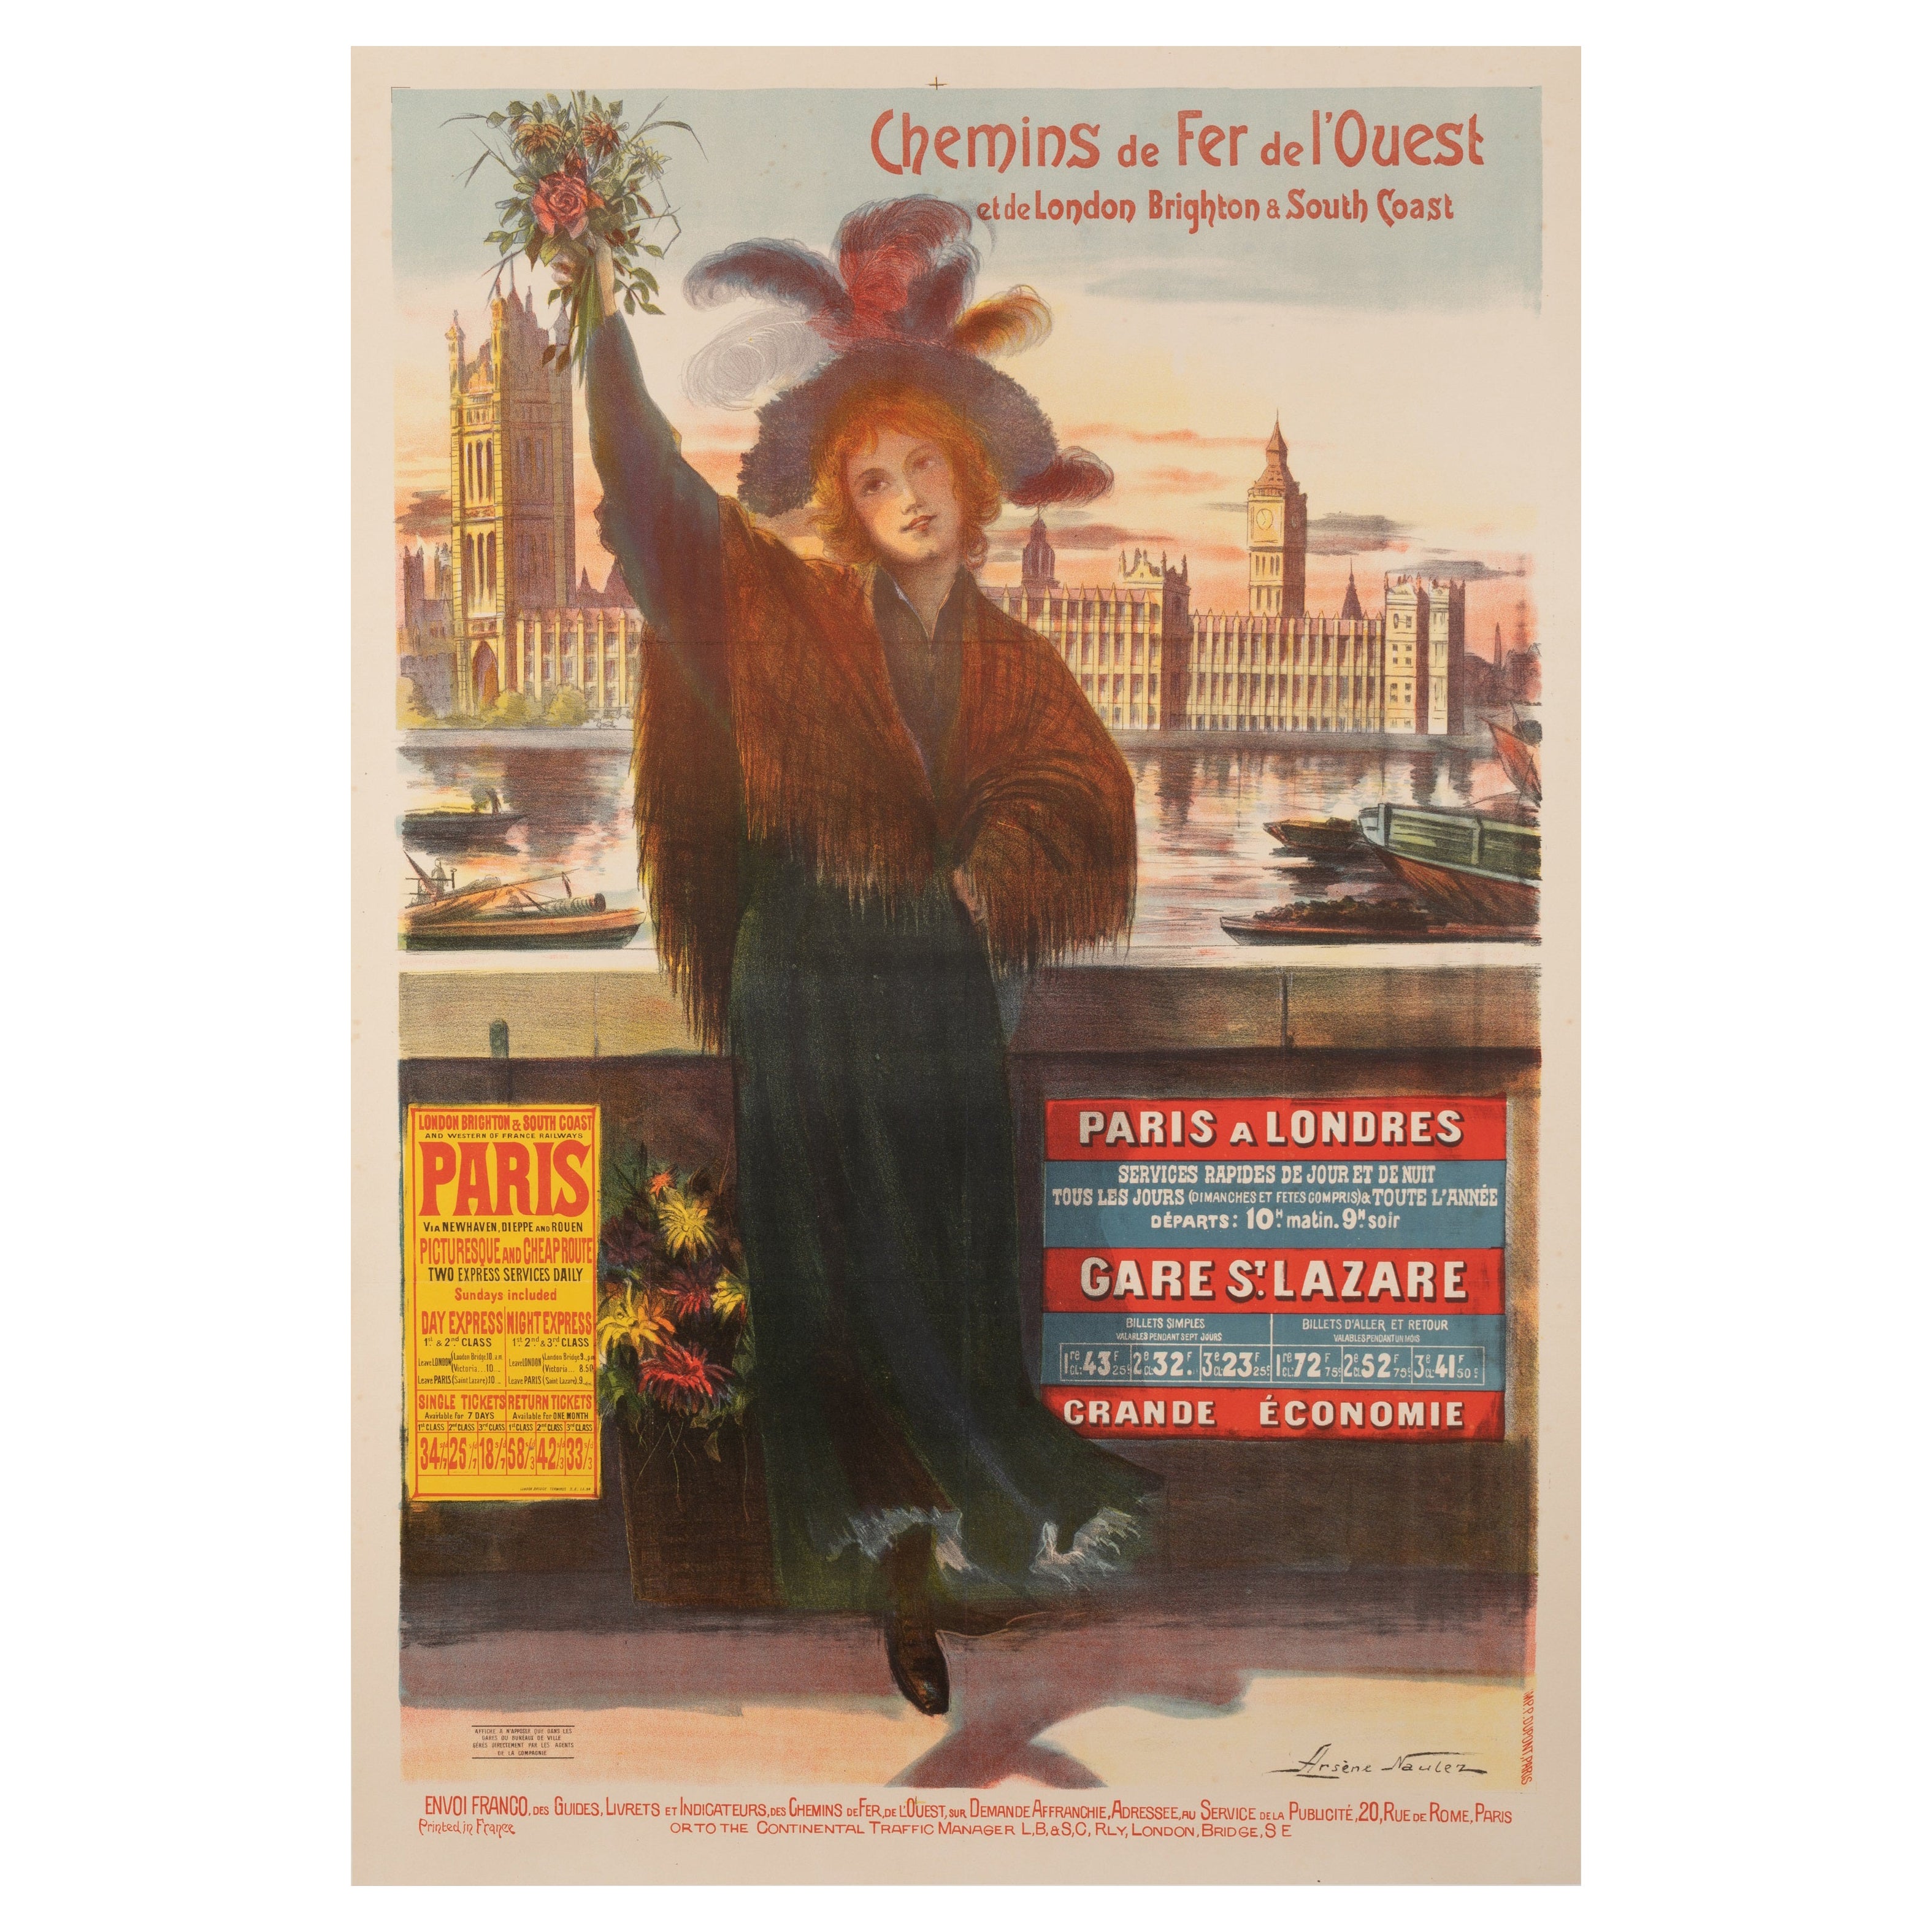 Naulez, Original Railway Poster, Paris London Brighton, Big Ben Westminster 1904 For Sale